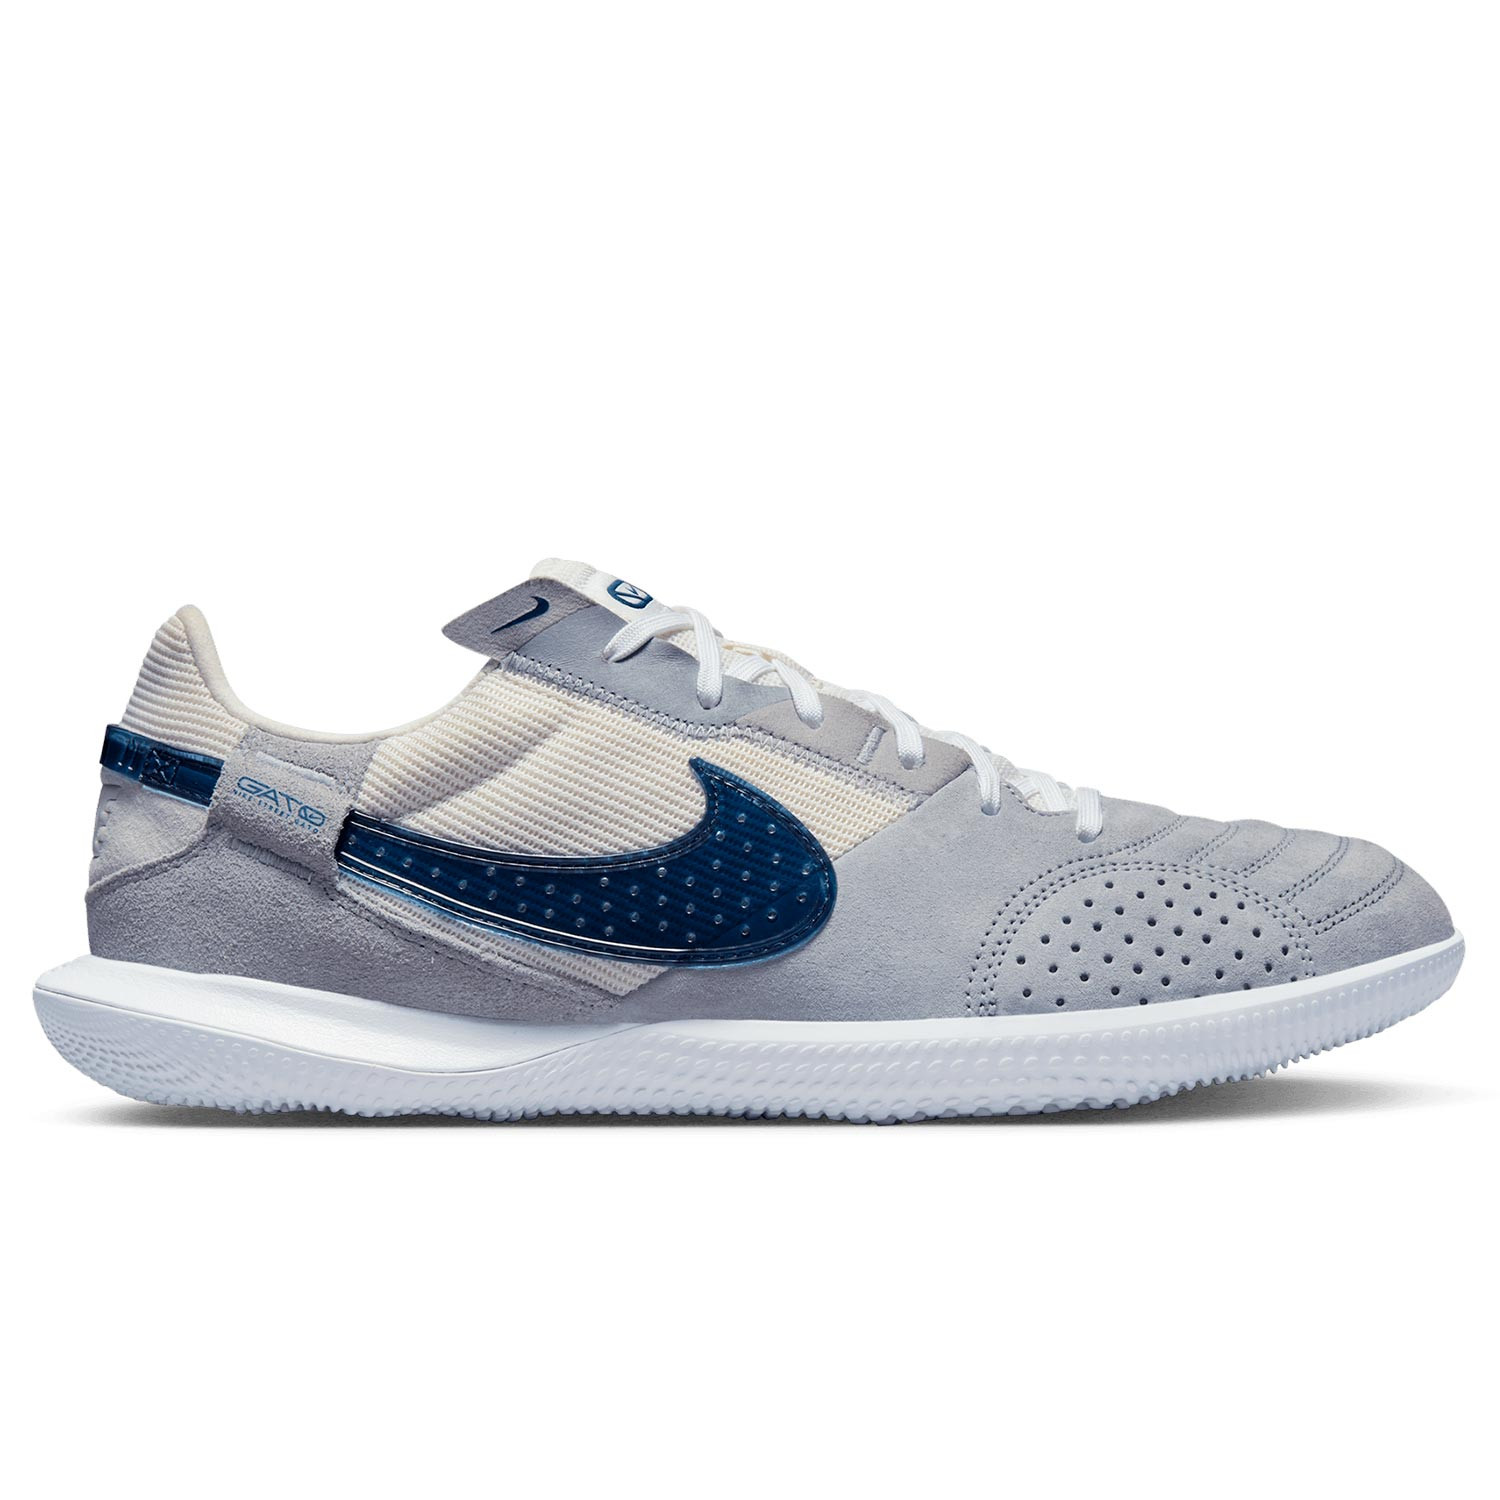 Brote Teseo beneficioso Zapatillas futsal Nike Street Gato grises azul marino | futbolmania